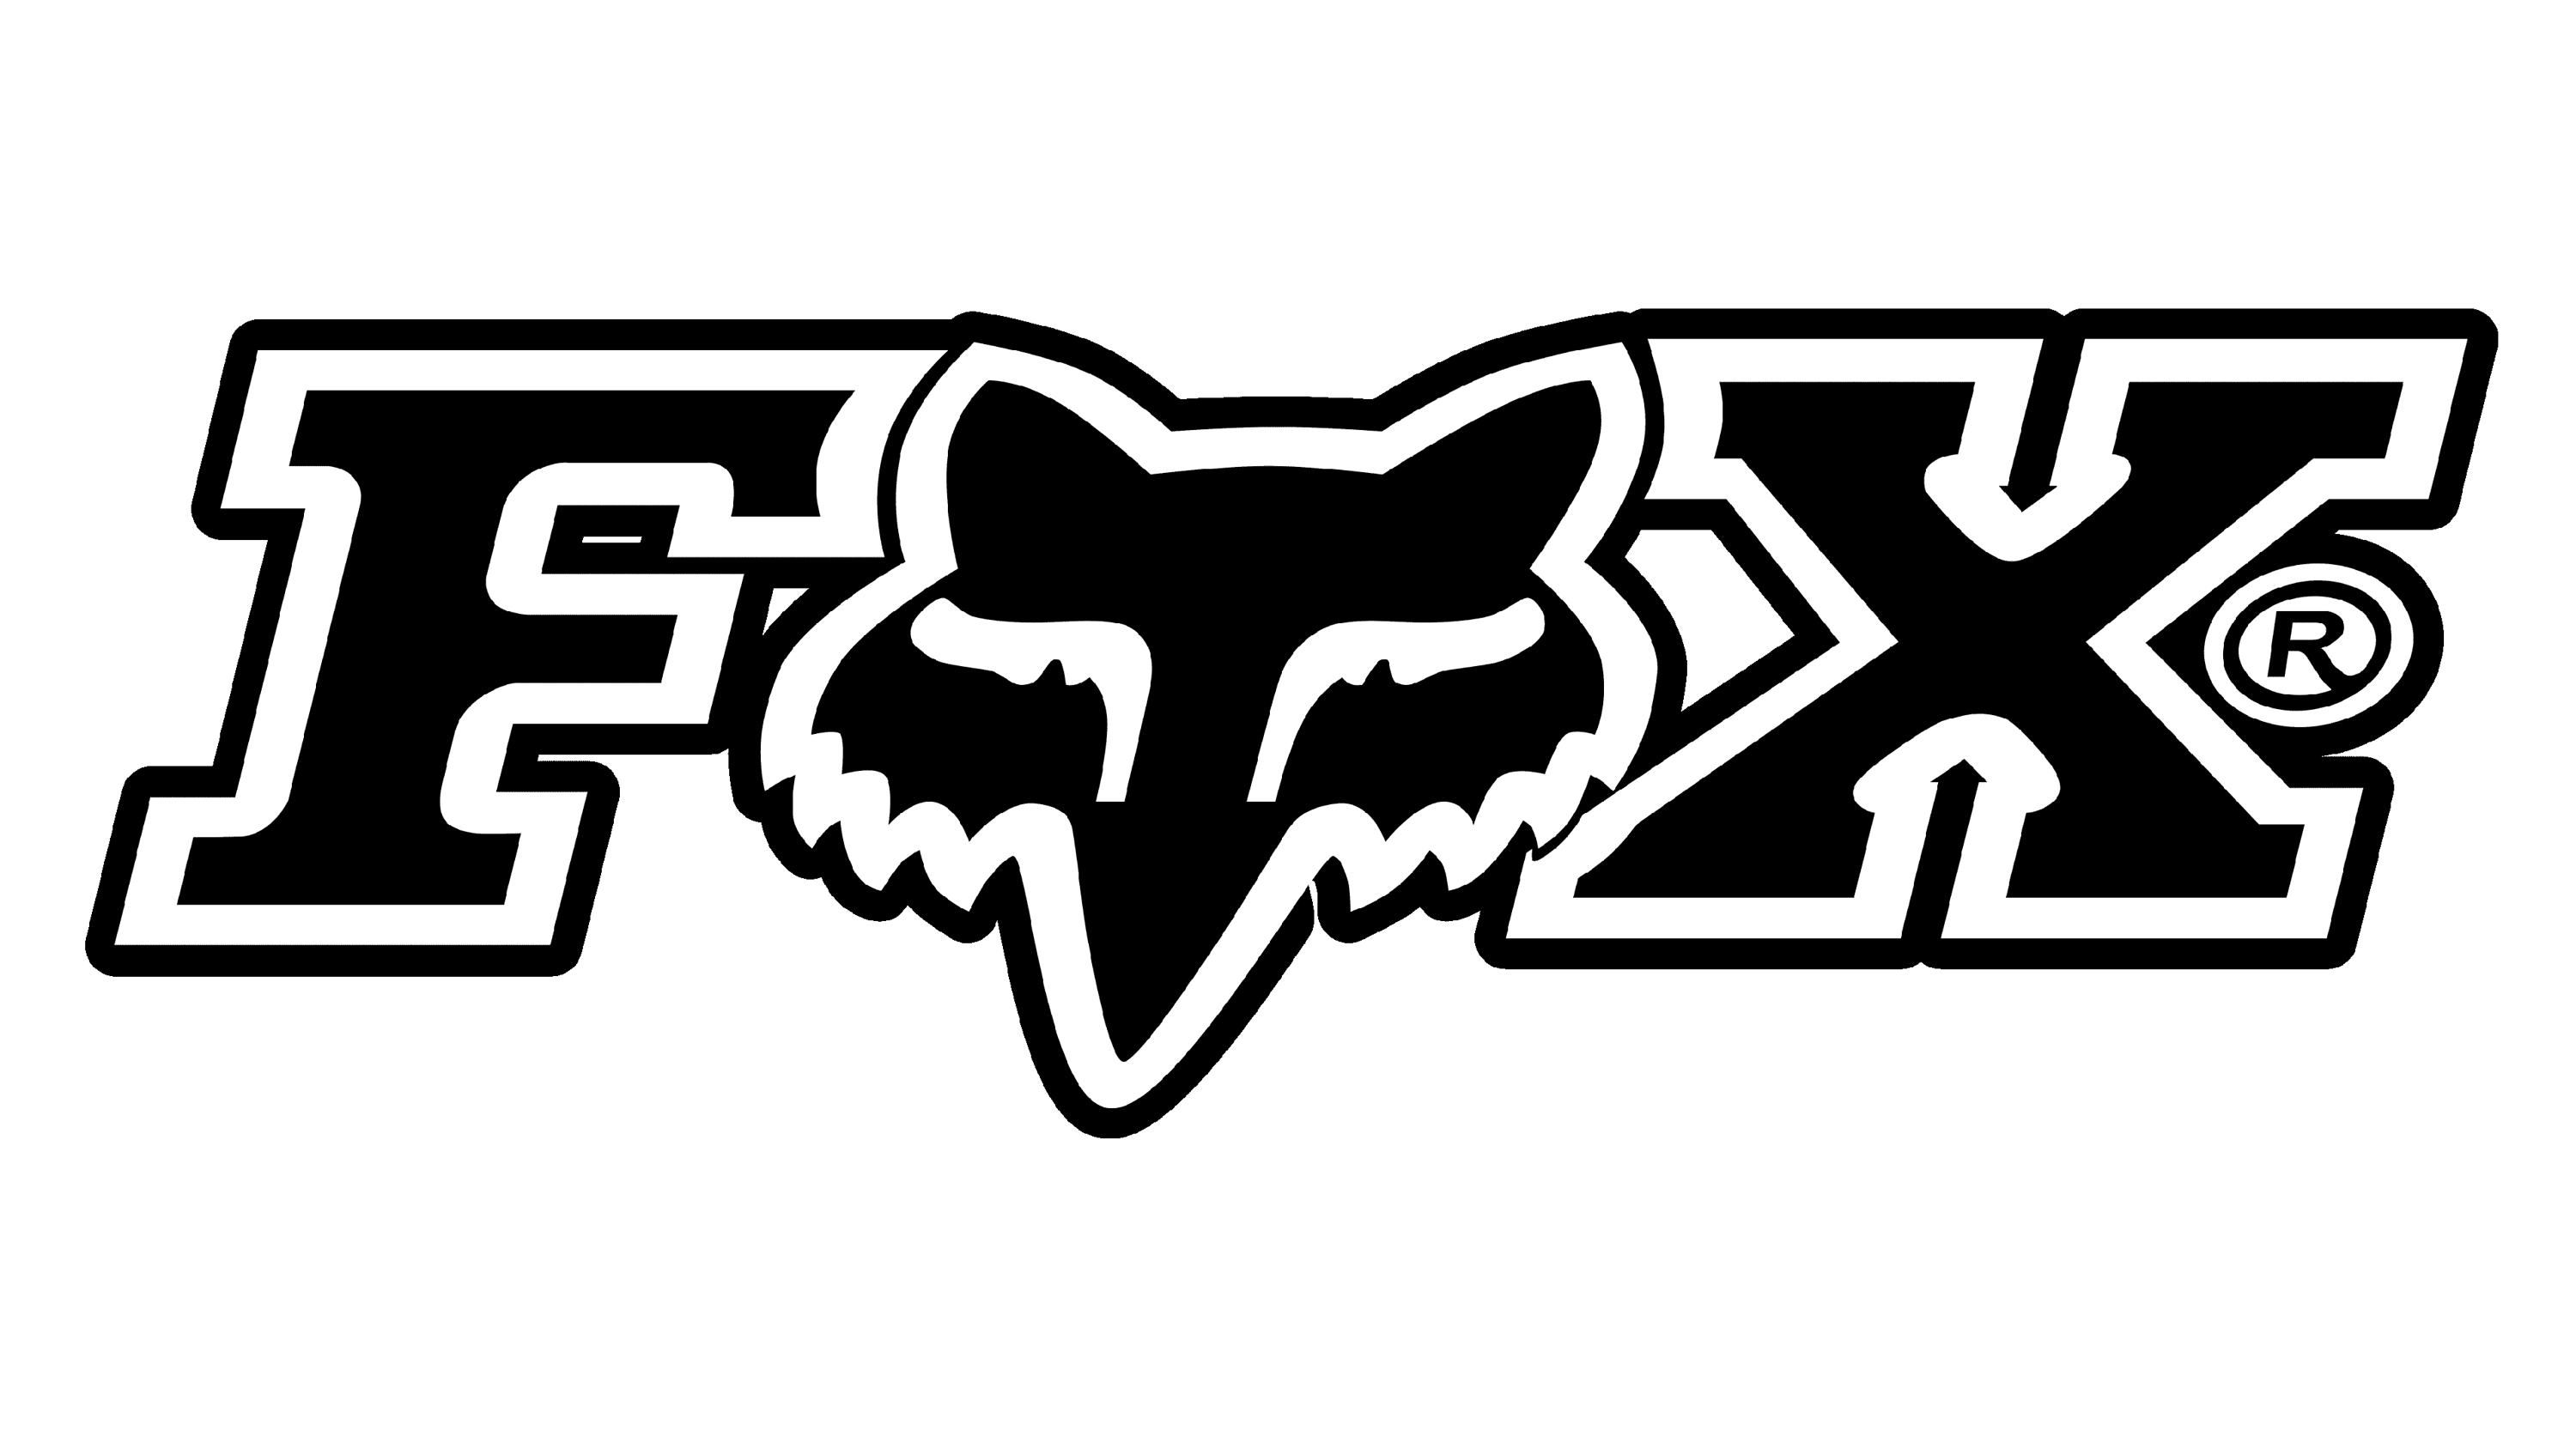 FOX RACING Logo